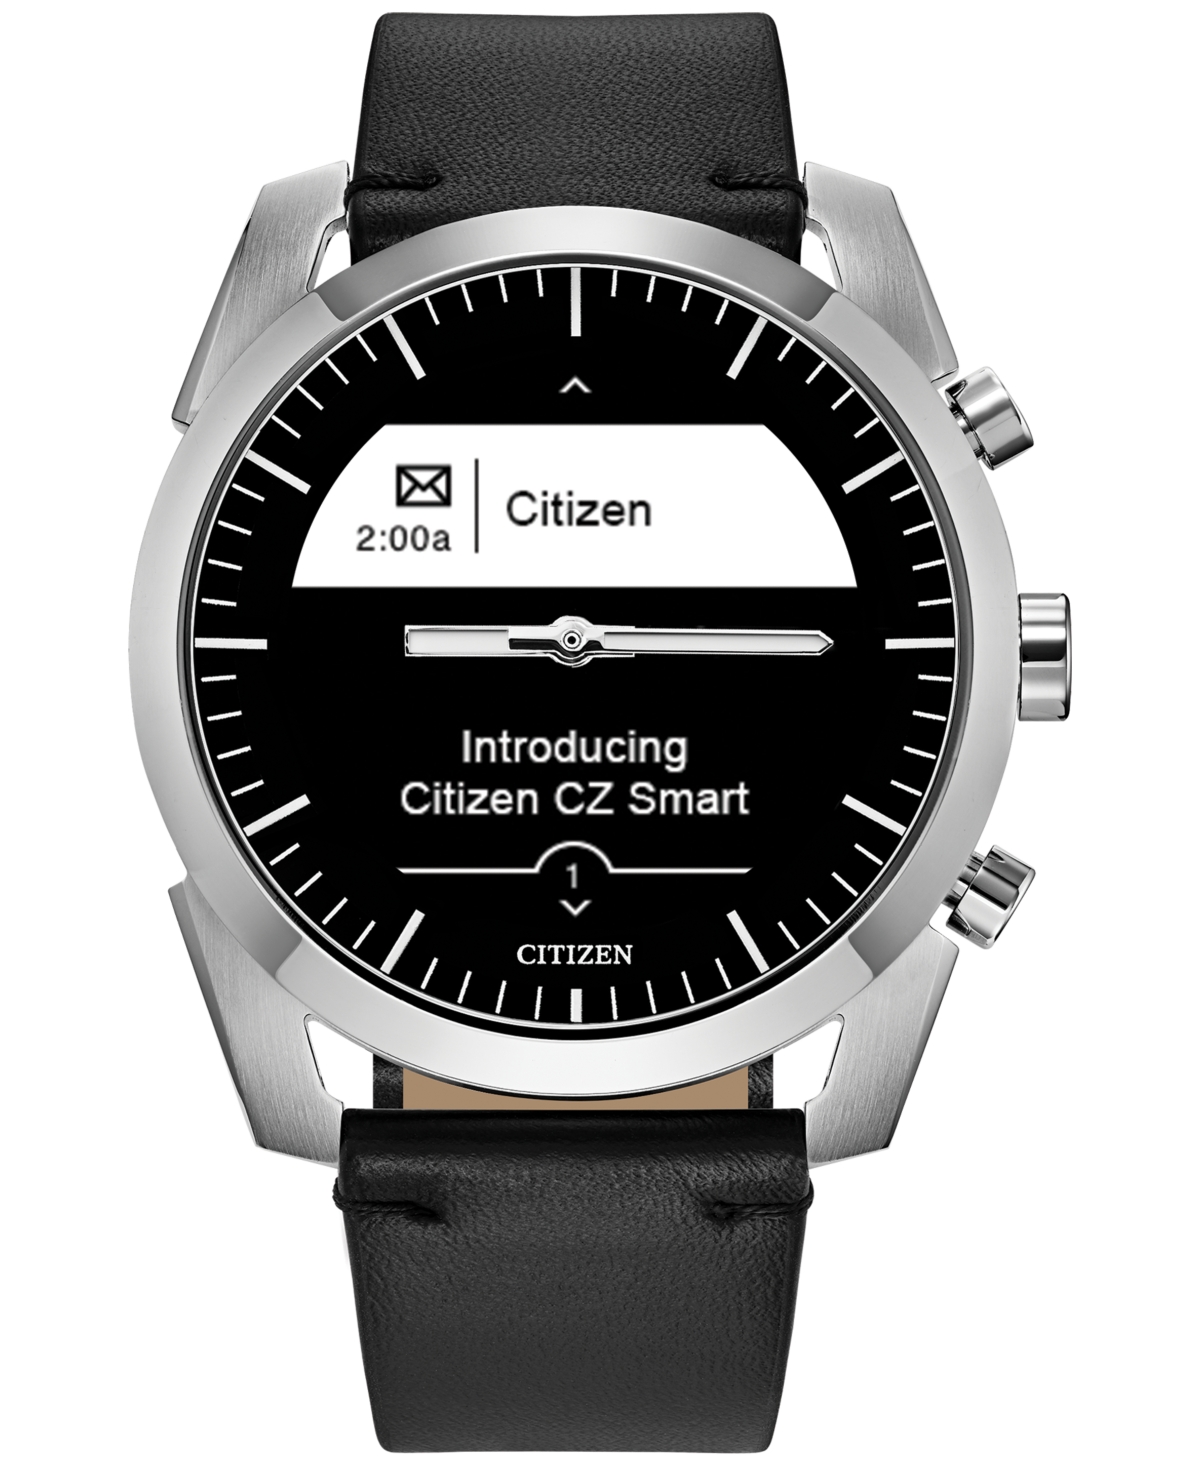 Shop Citizen Men's Cz Smart Hybrid Sport Black Leather Strap Smart Watch 43mm